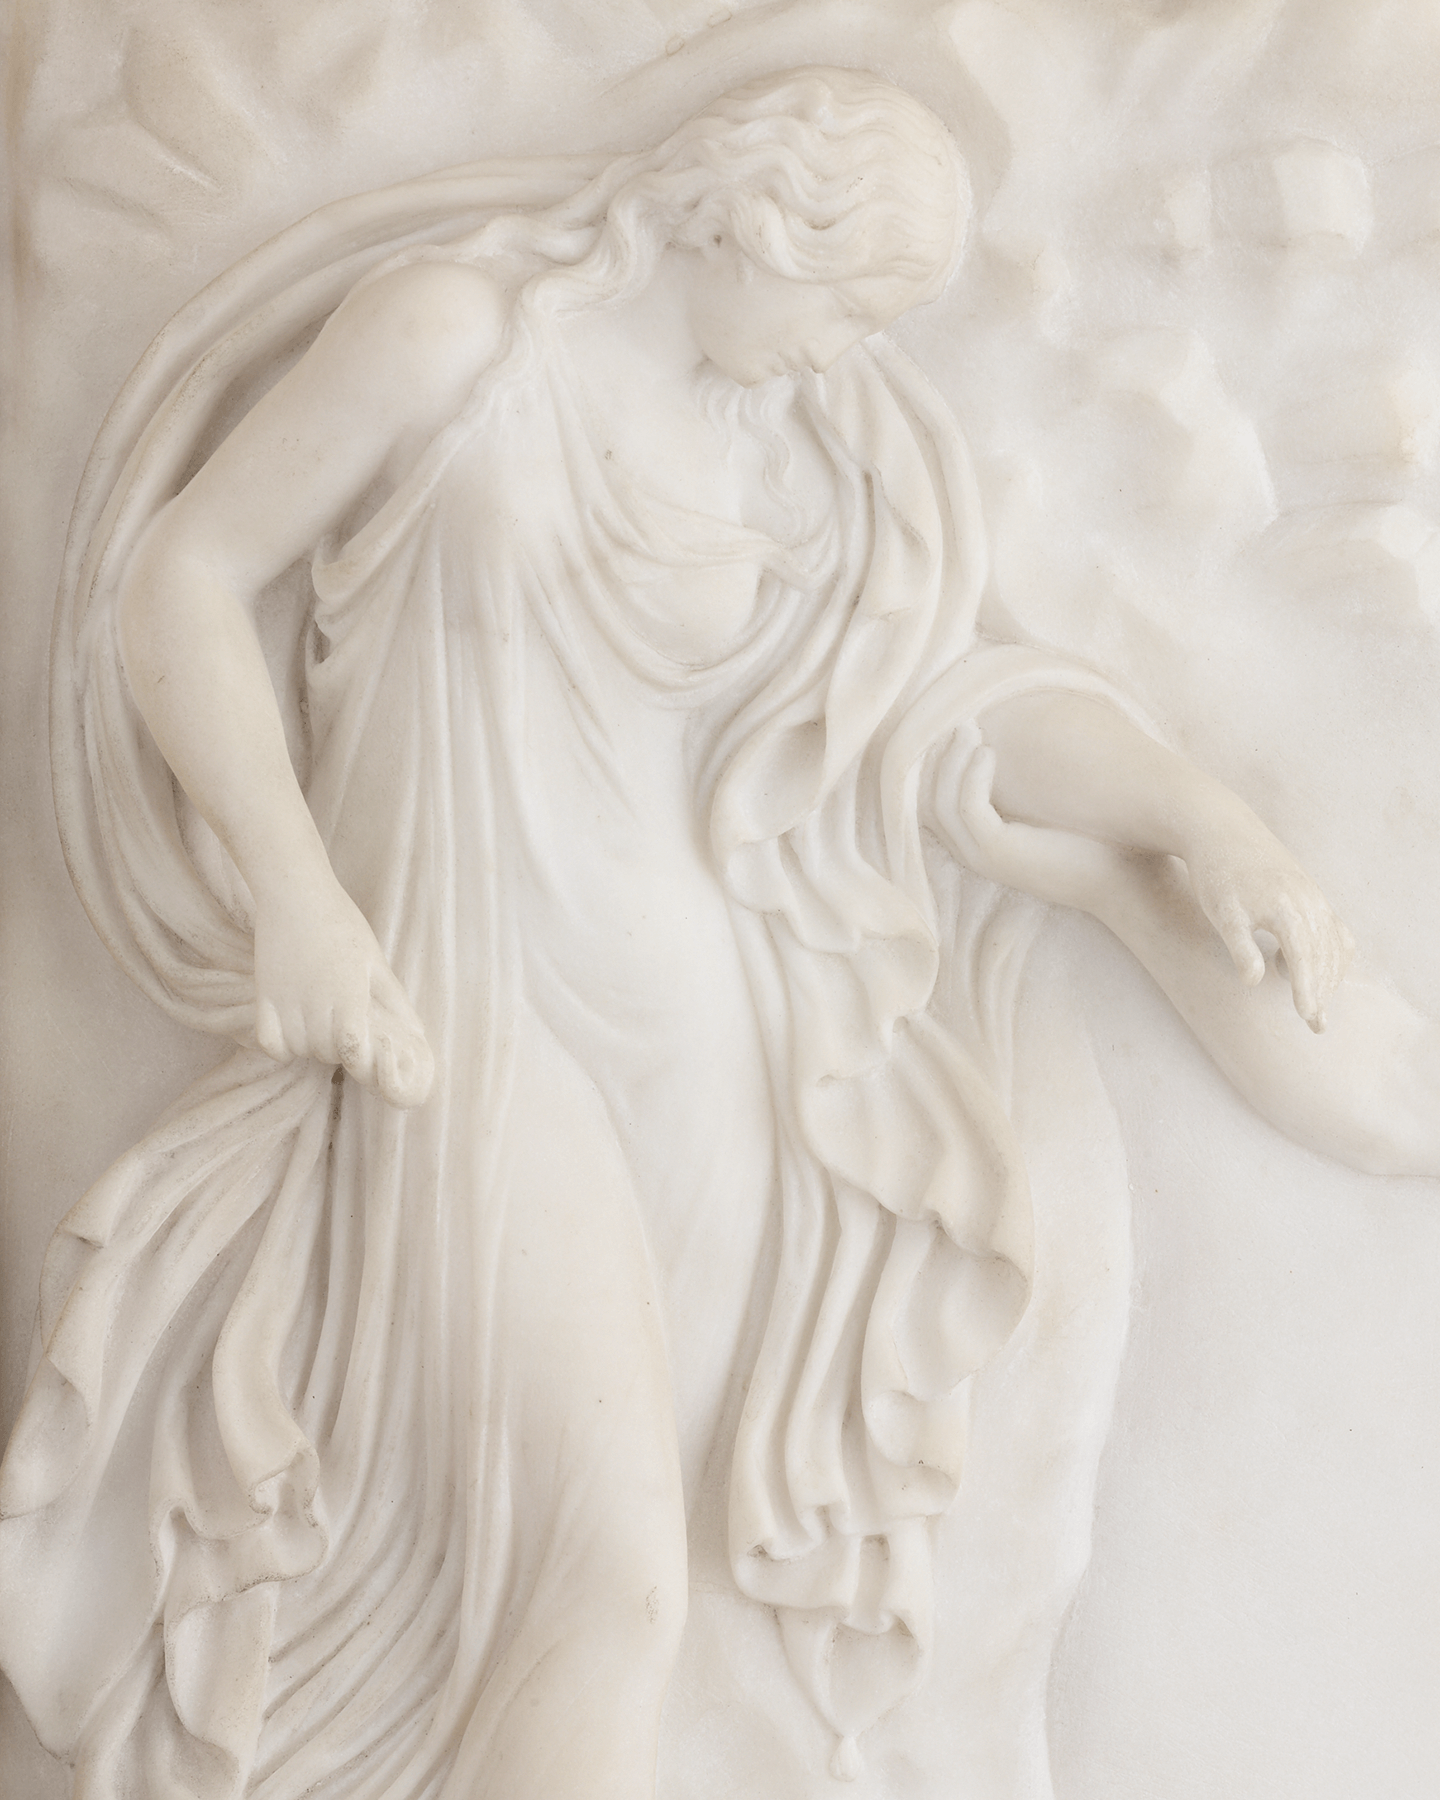 Italian Mythological Marble Plaques